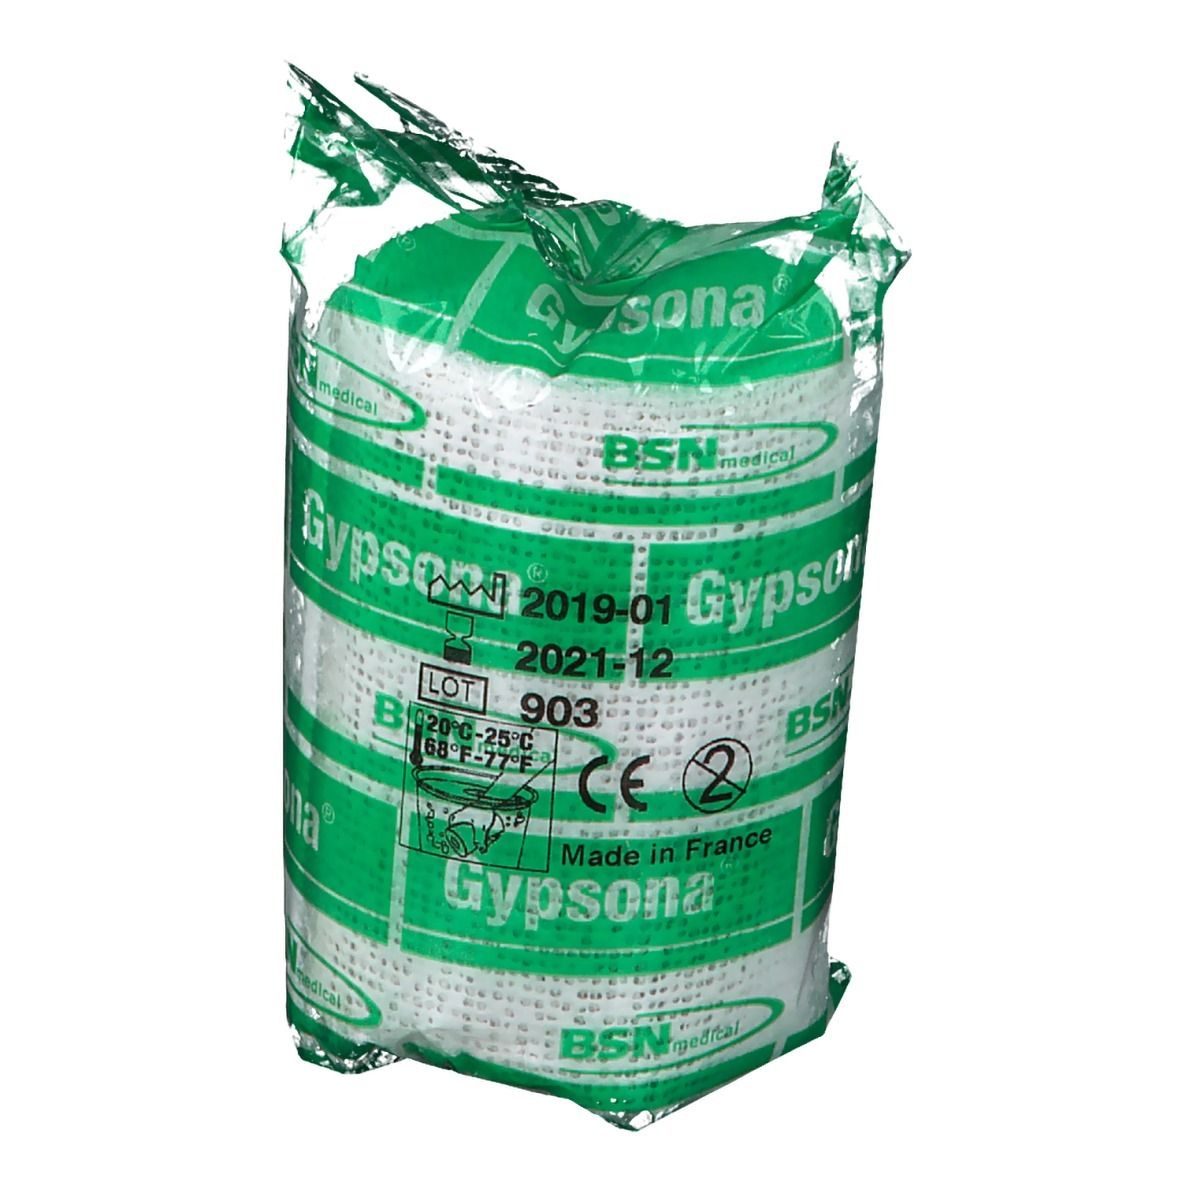 Gyspsona® Bande plâtre 7,5 cm x 2,7 m